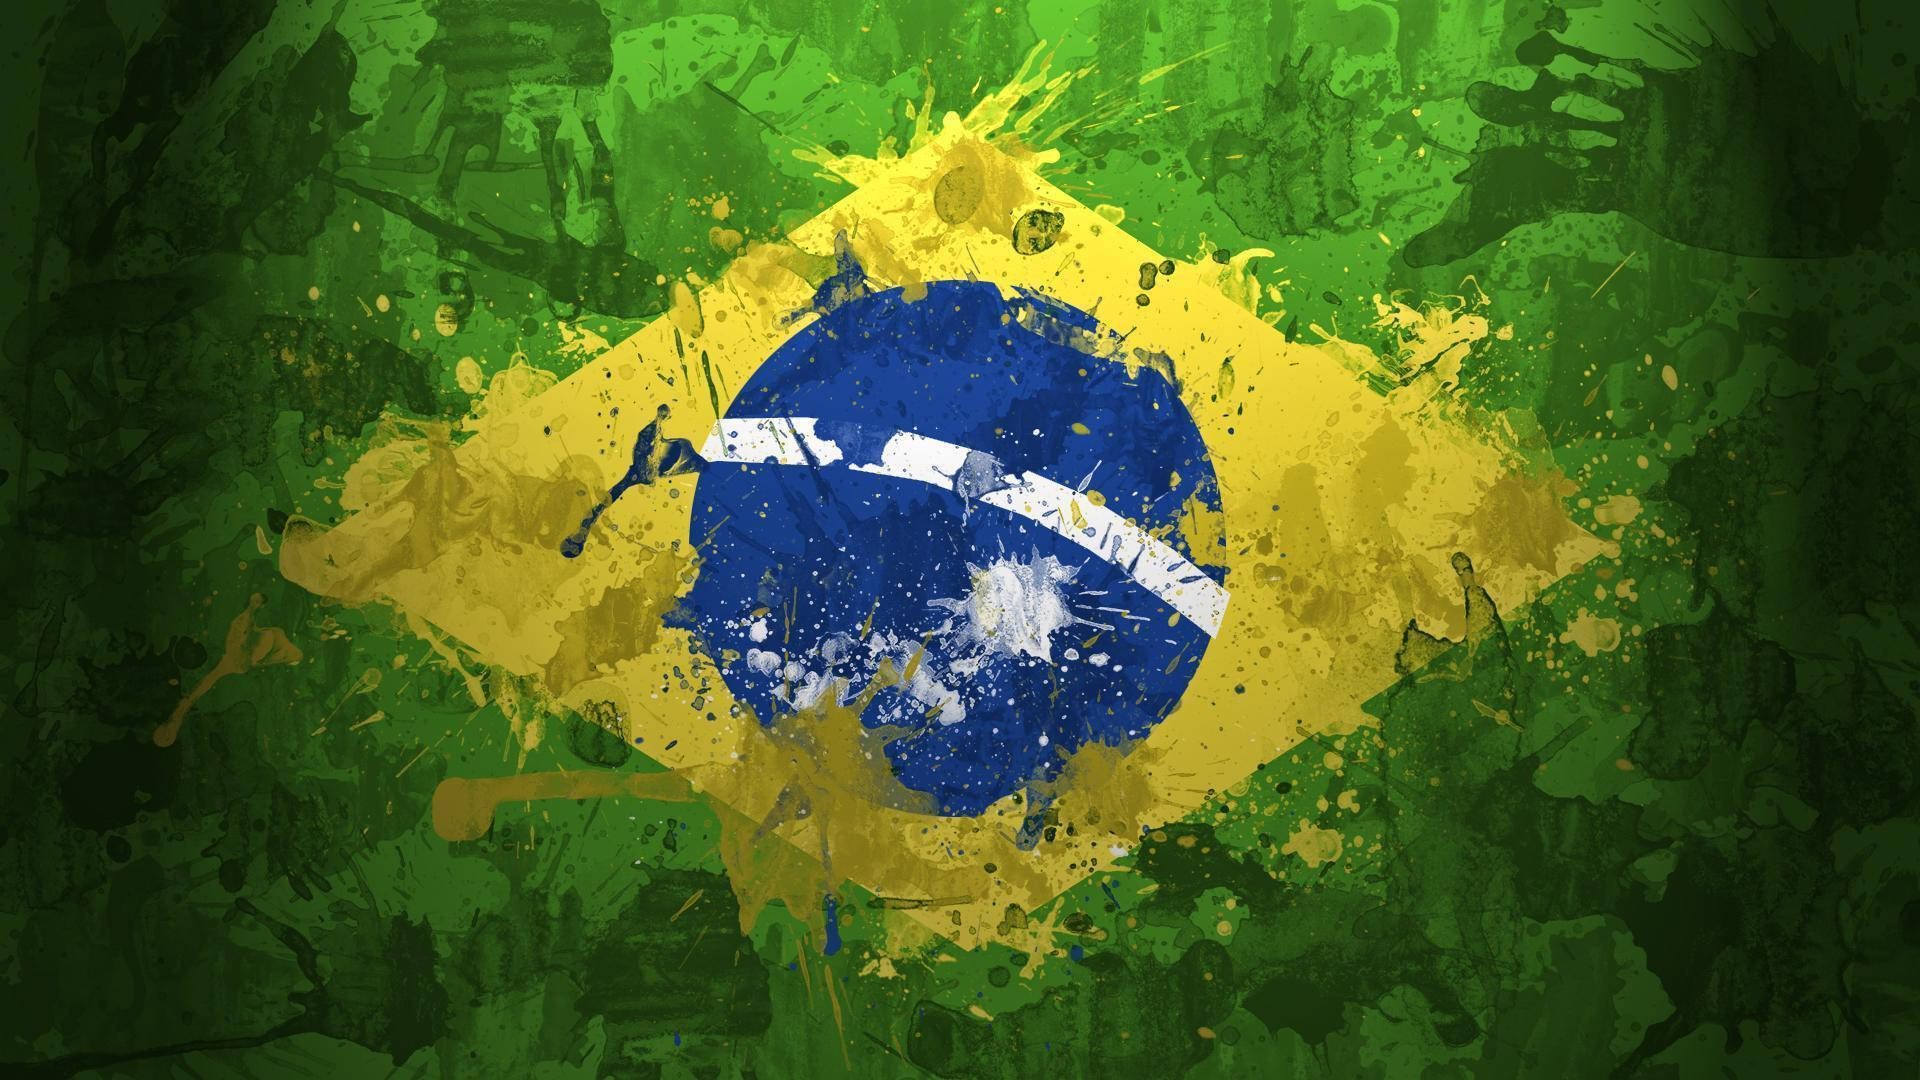 Caption: Vibrant Cartoon Illustration Of The Brazilian Flag In Textile Form Background